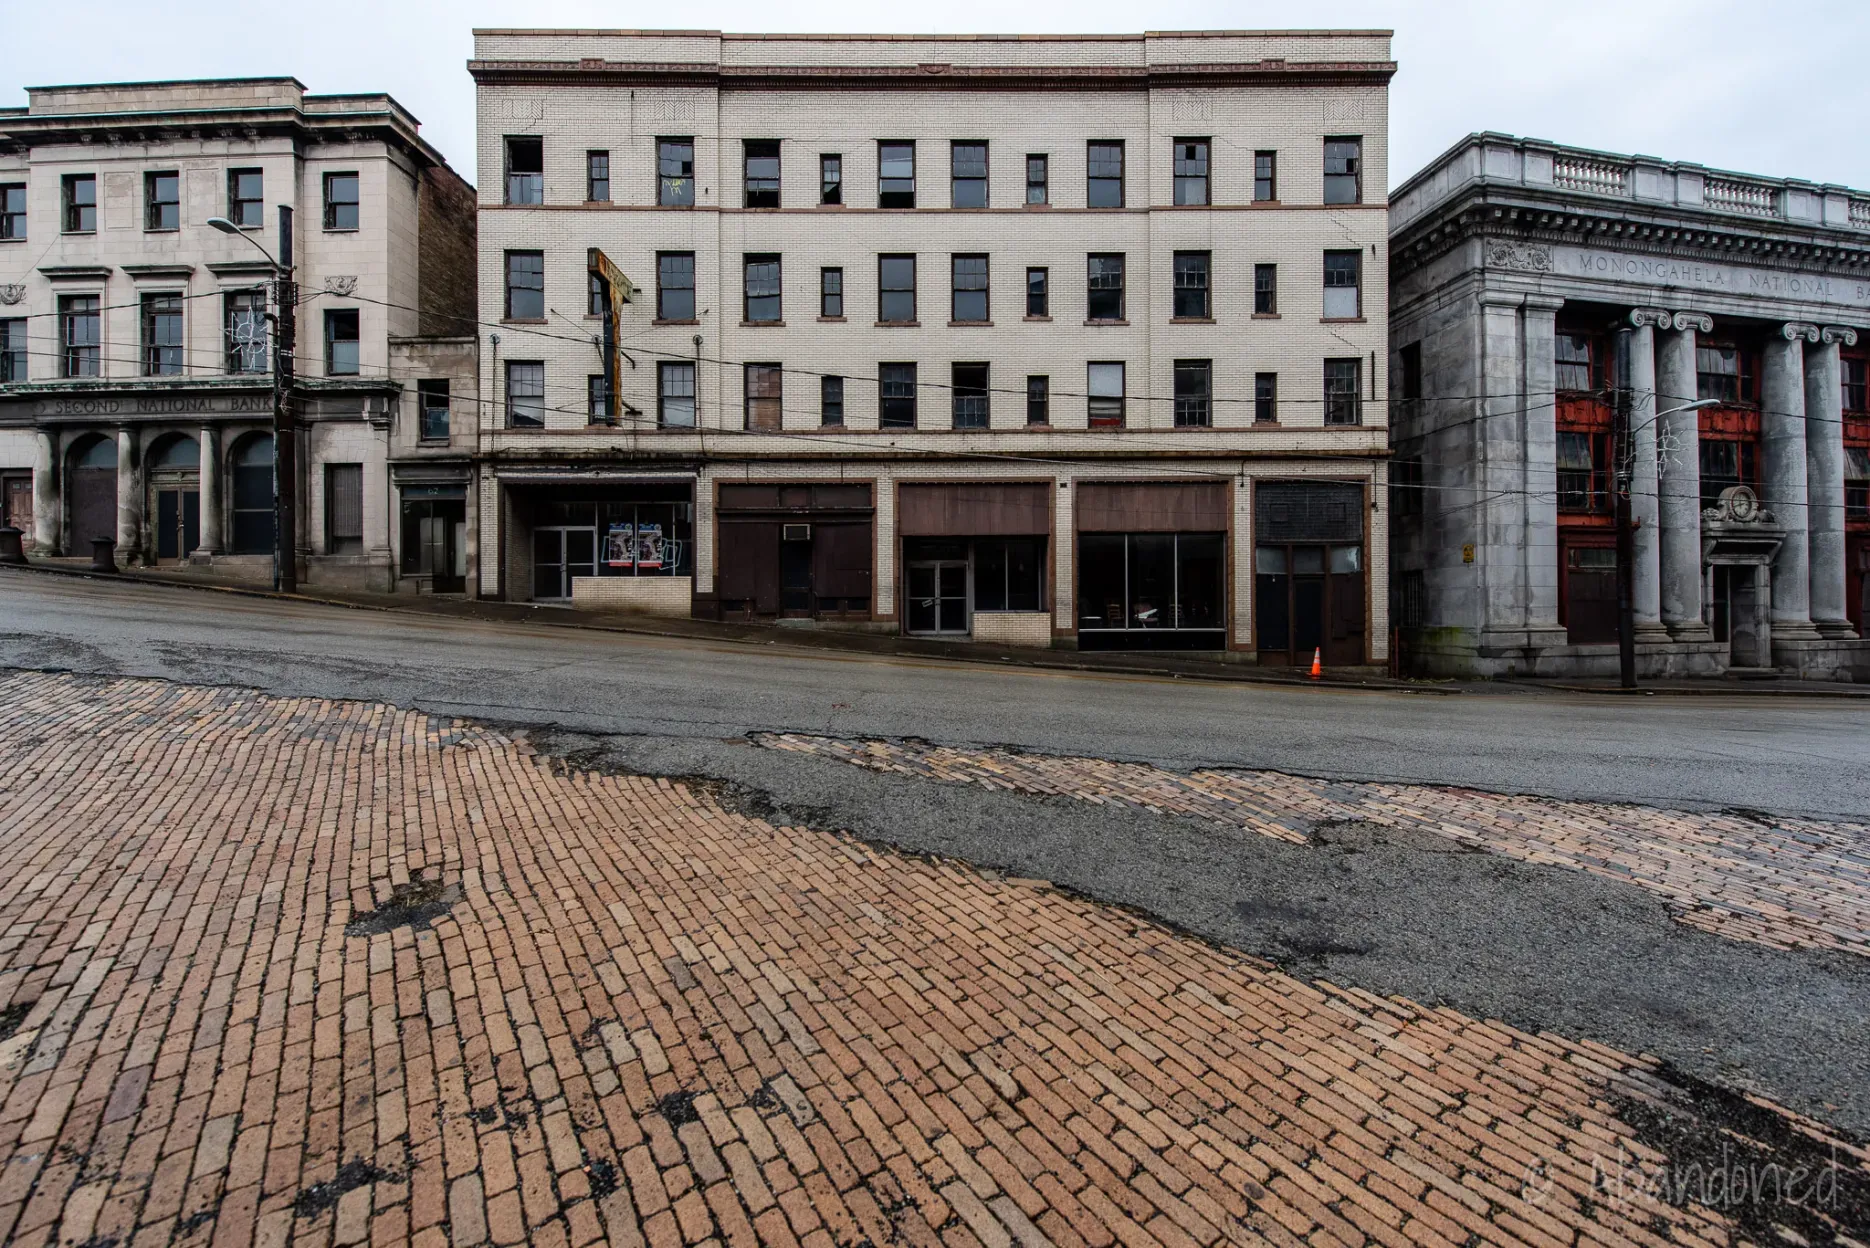 The Monongahela Hotel: A Forgotten Pennsylvania Gem